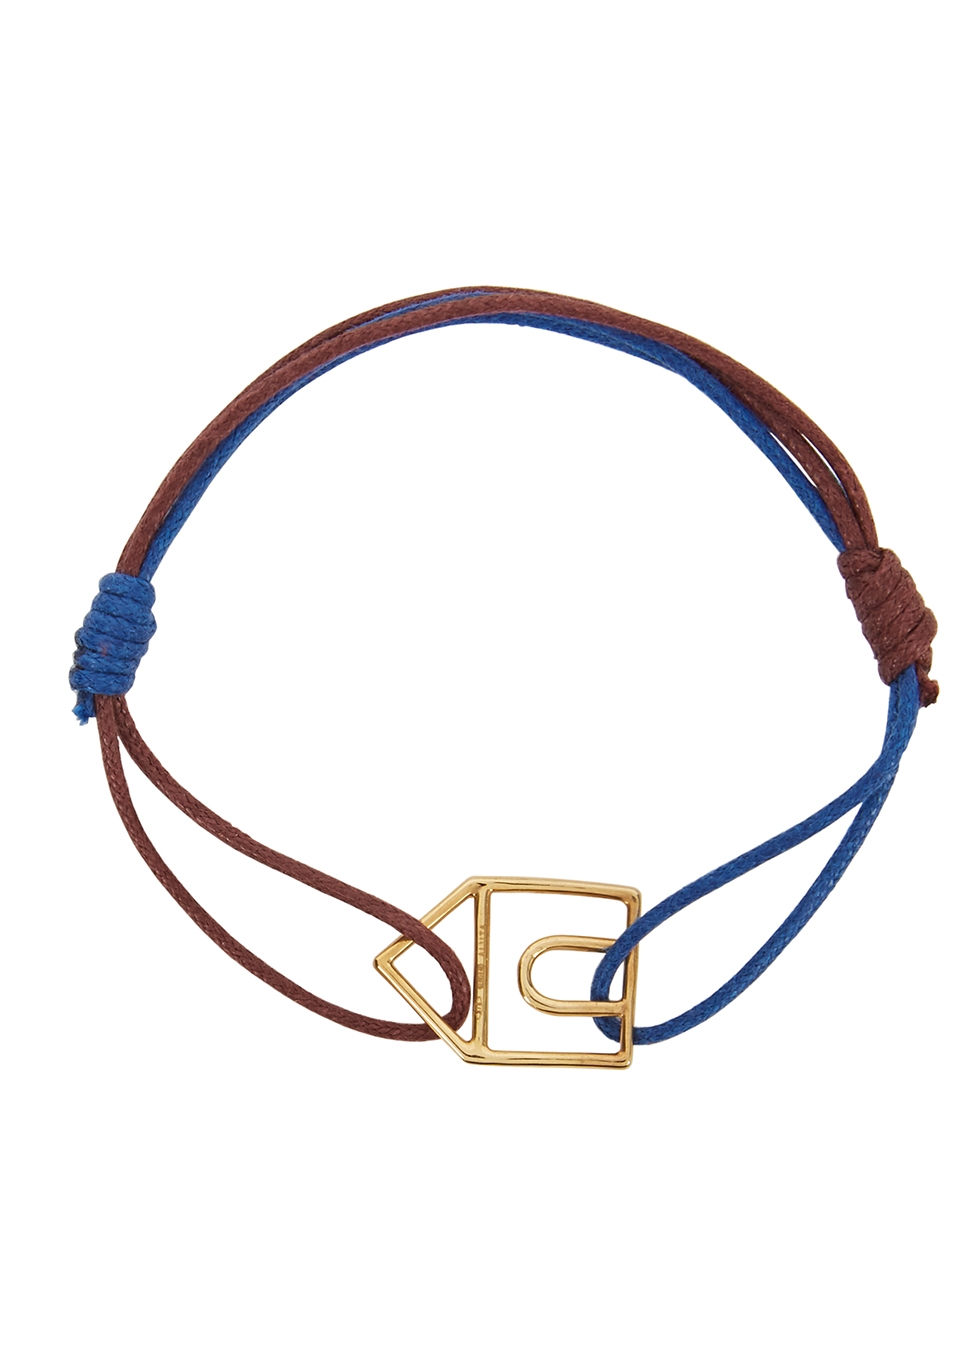 Casita Pura two-tone cord bracelet